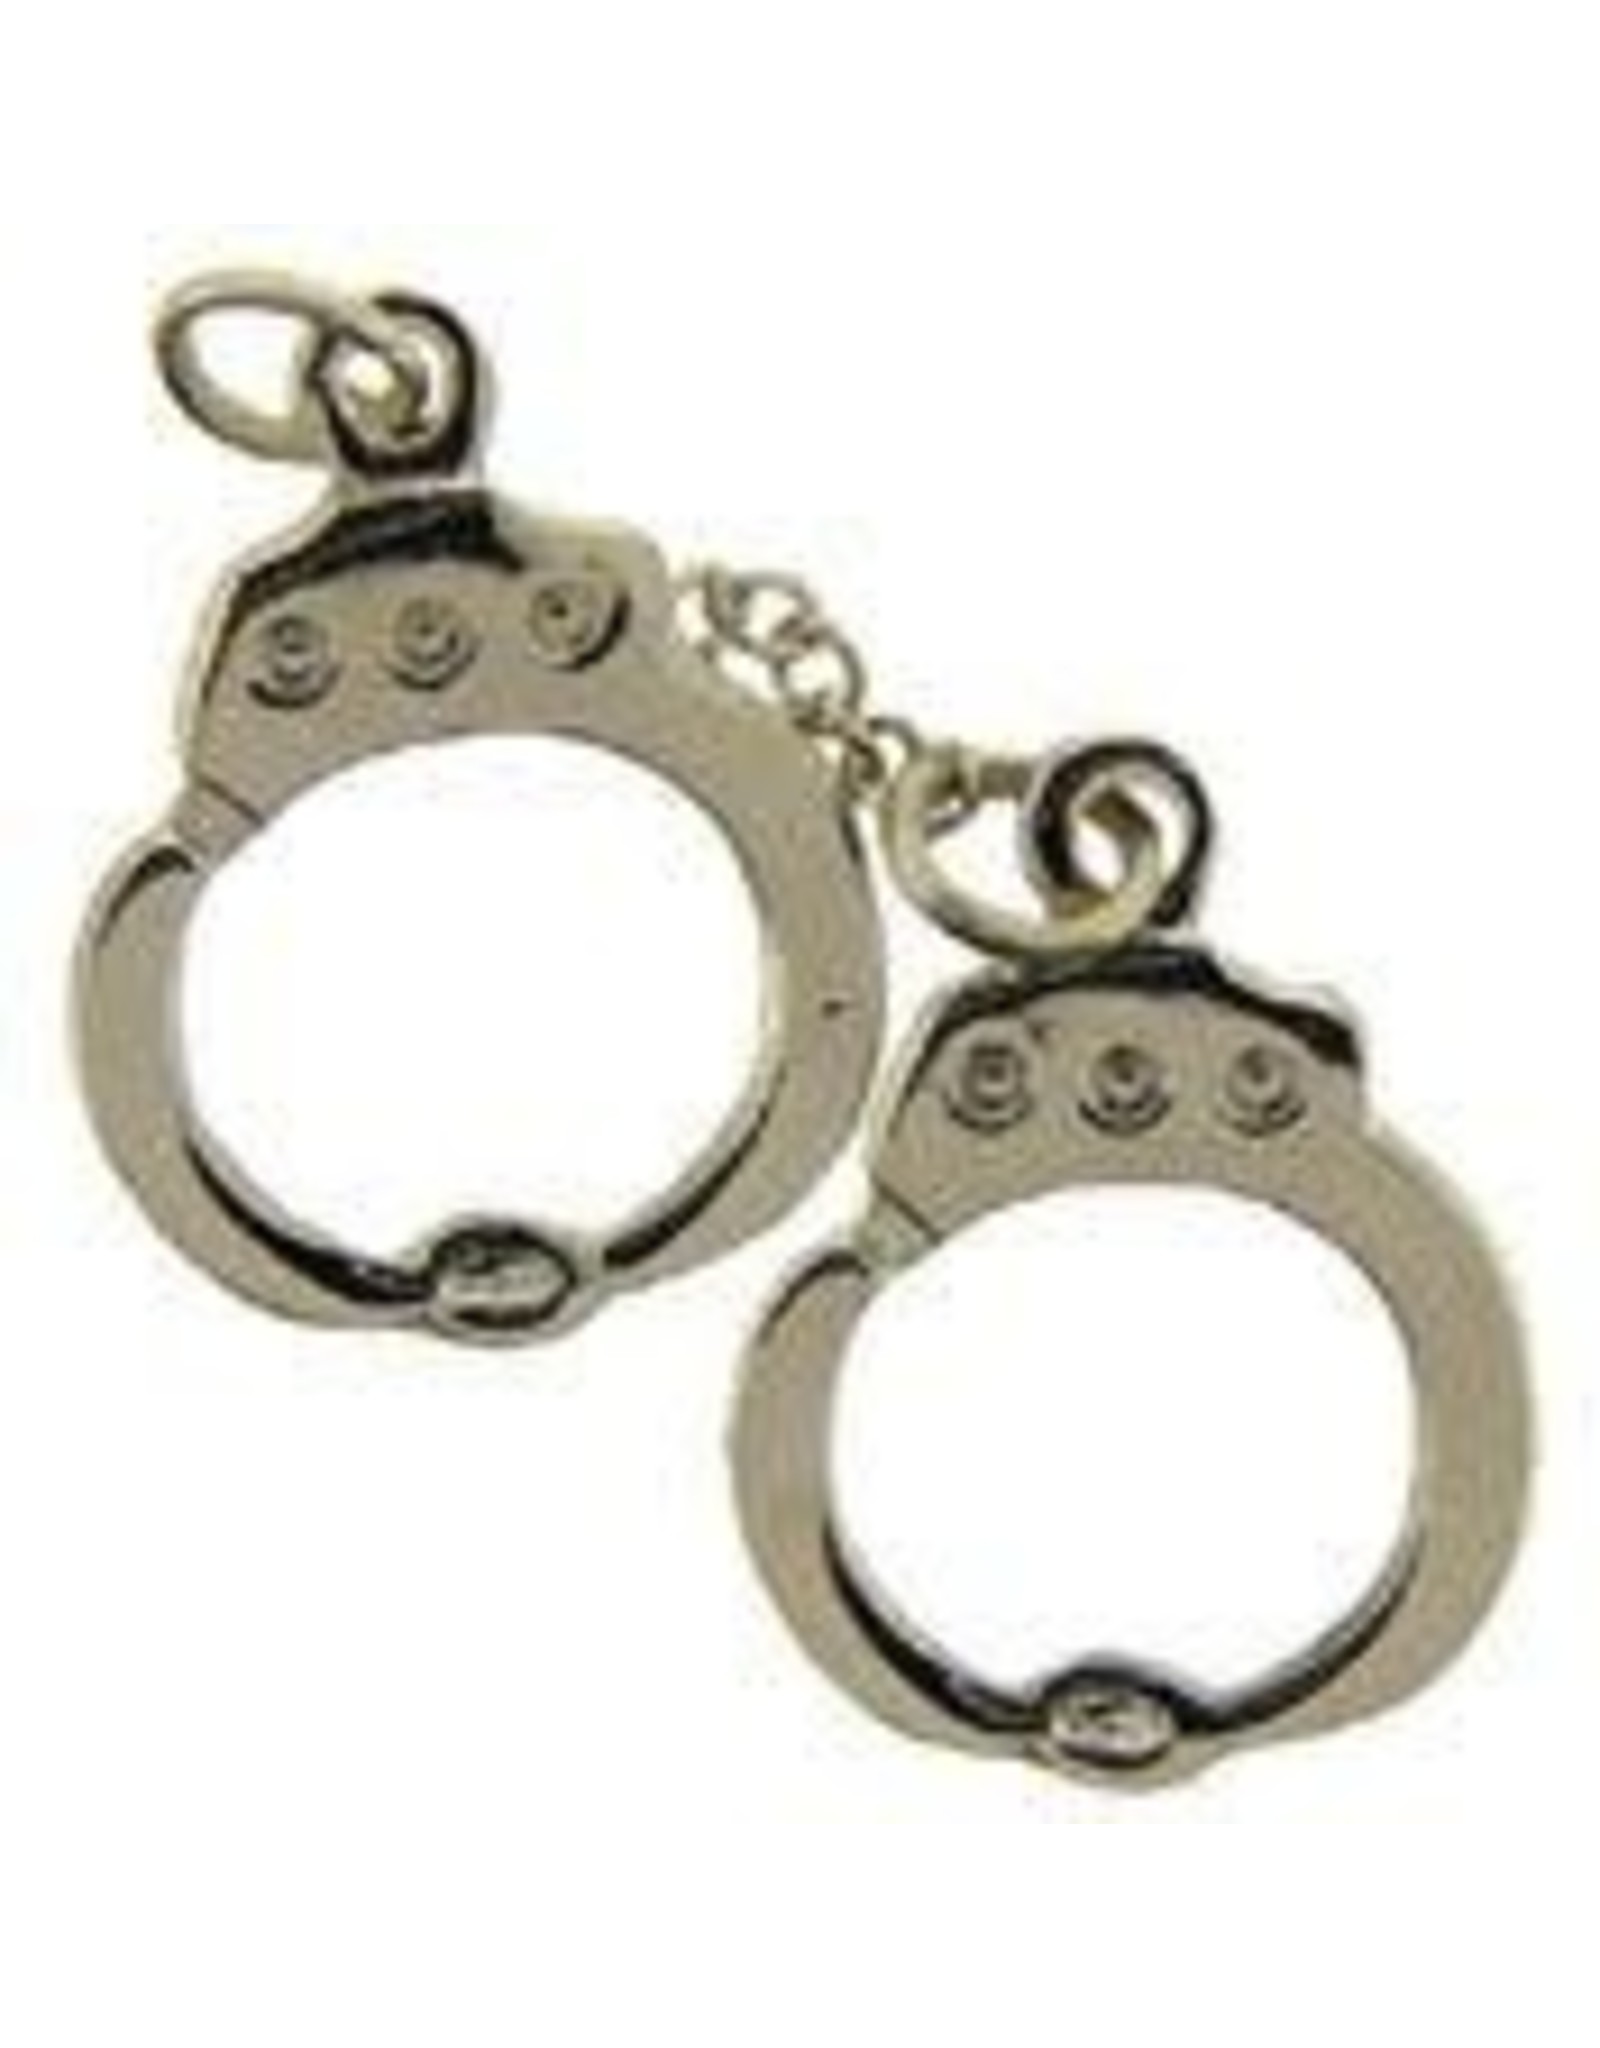 Pin - Police Handcuffs